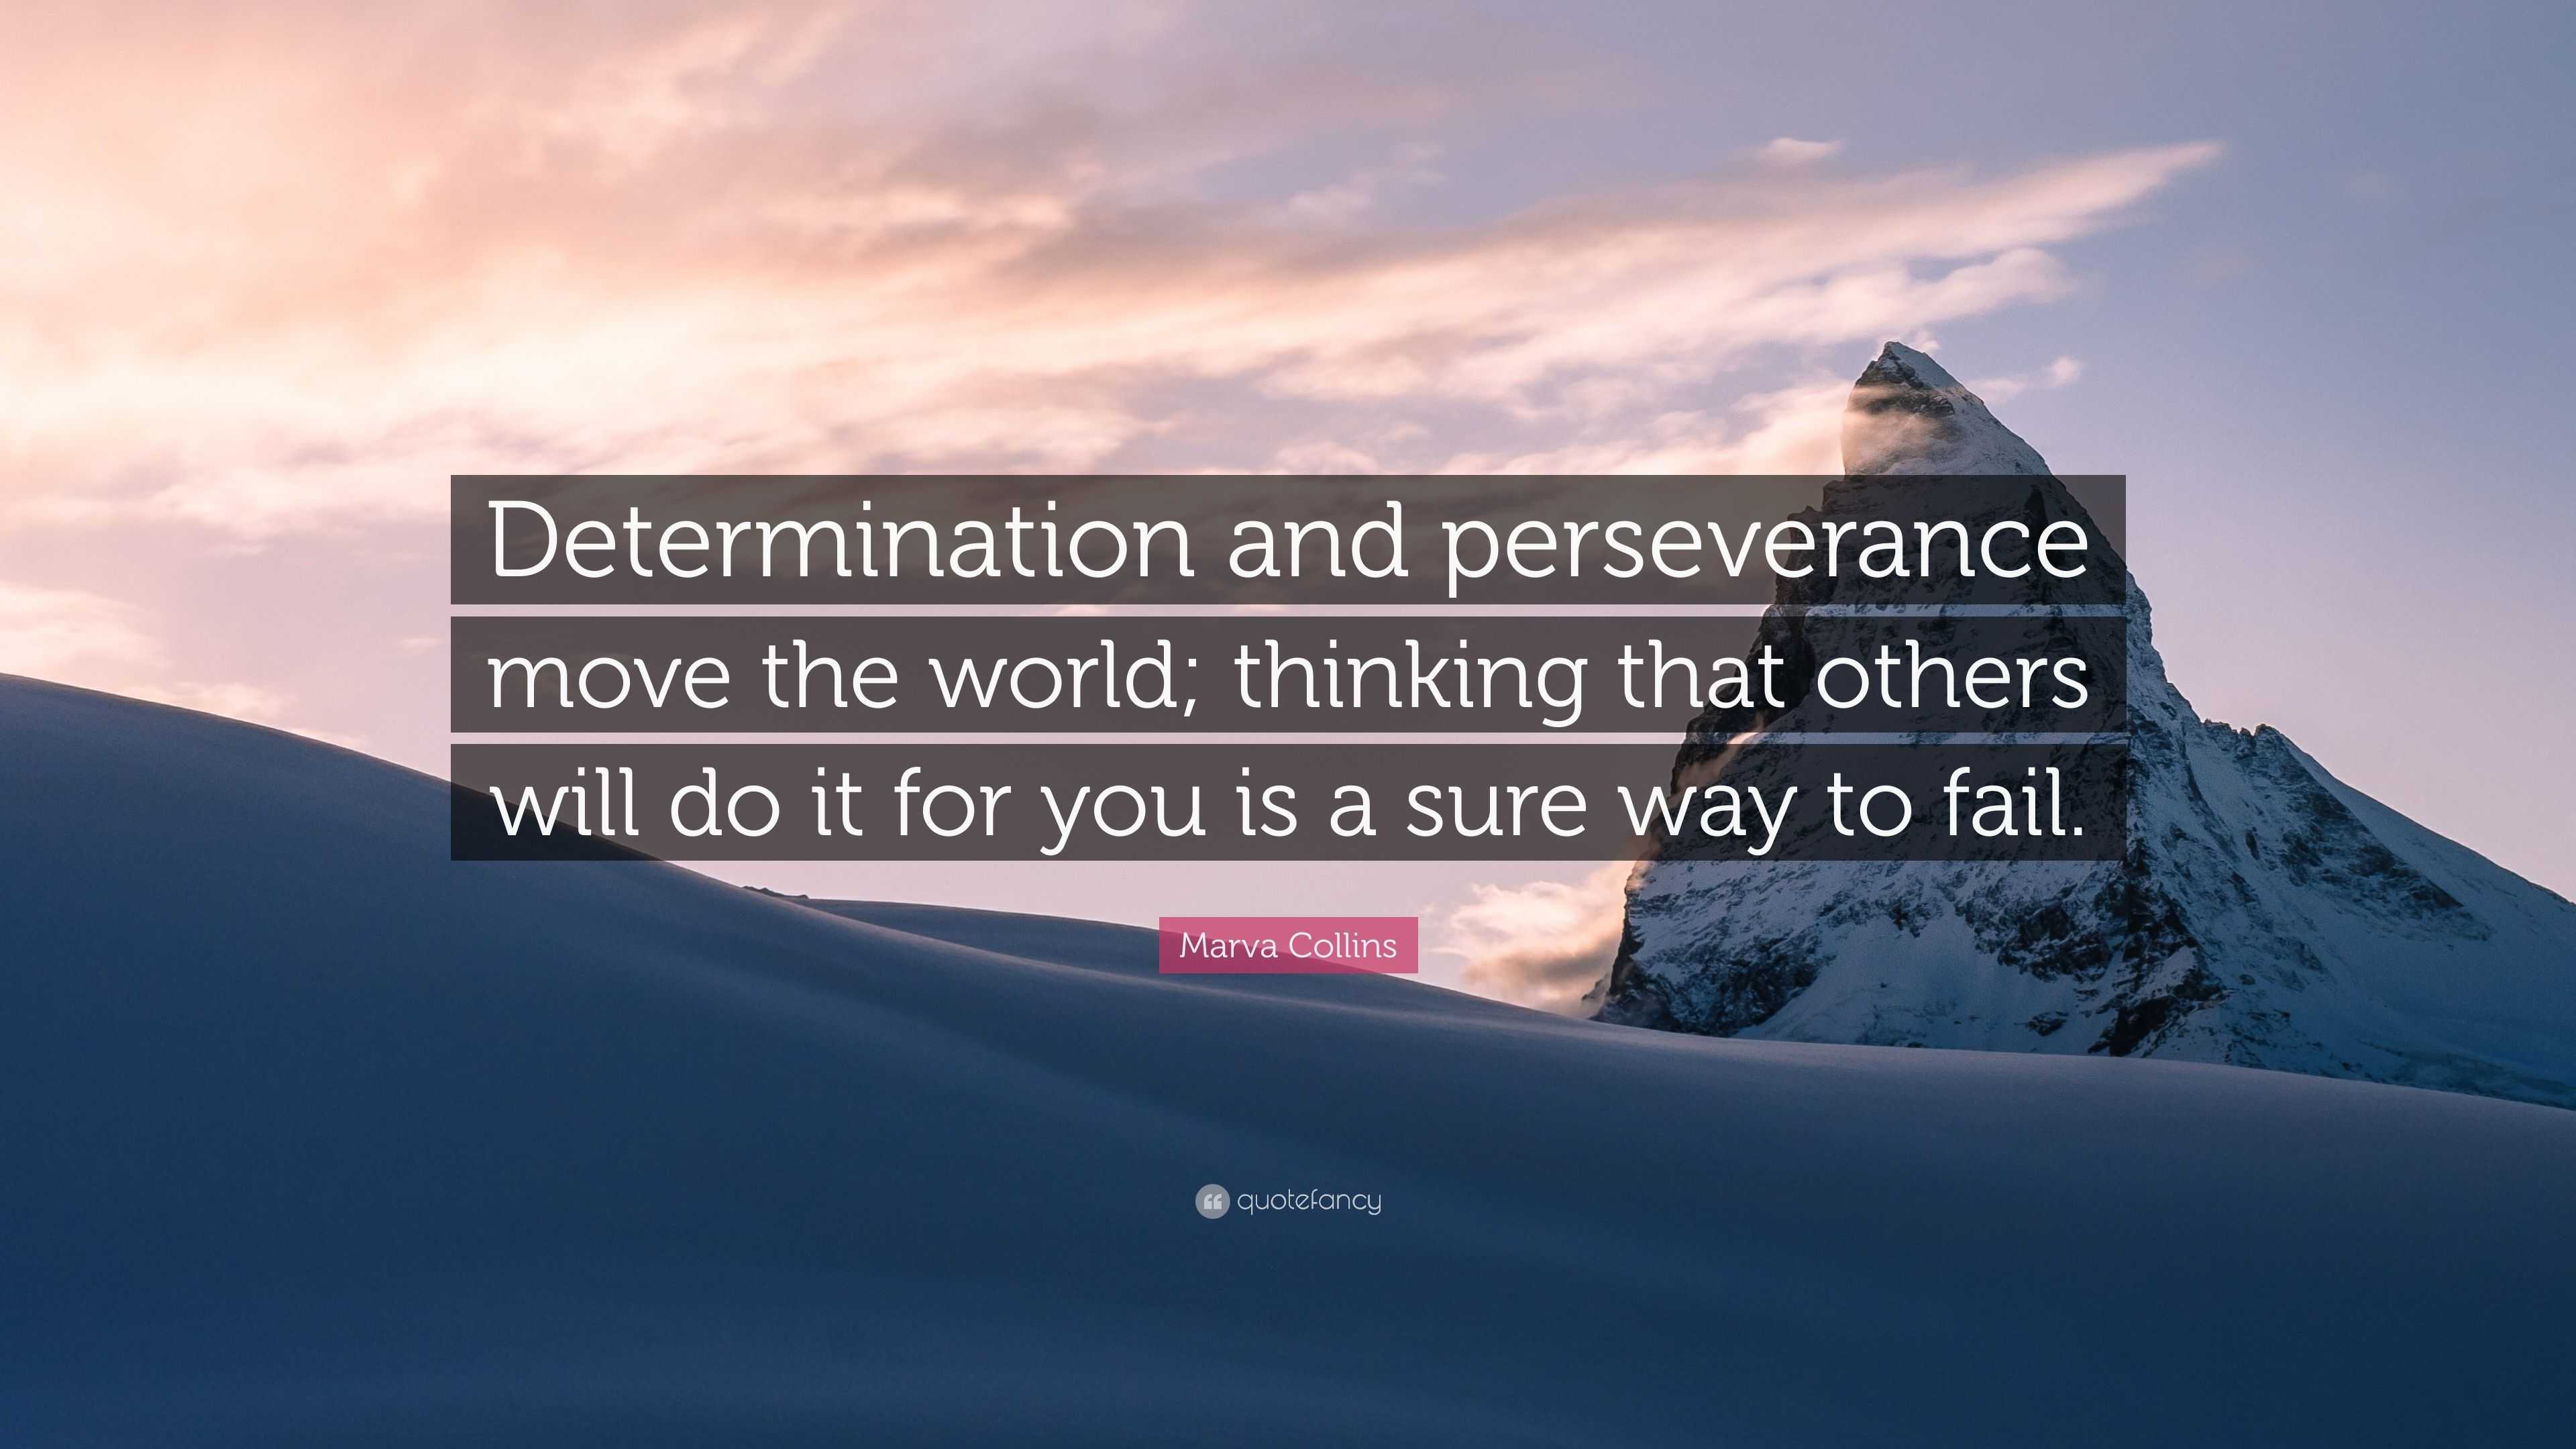 Marva Collins Quote “Determination and perseverance move